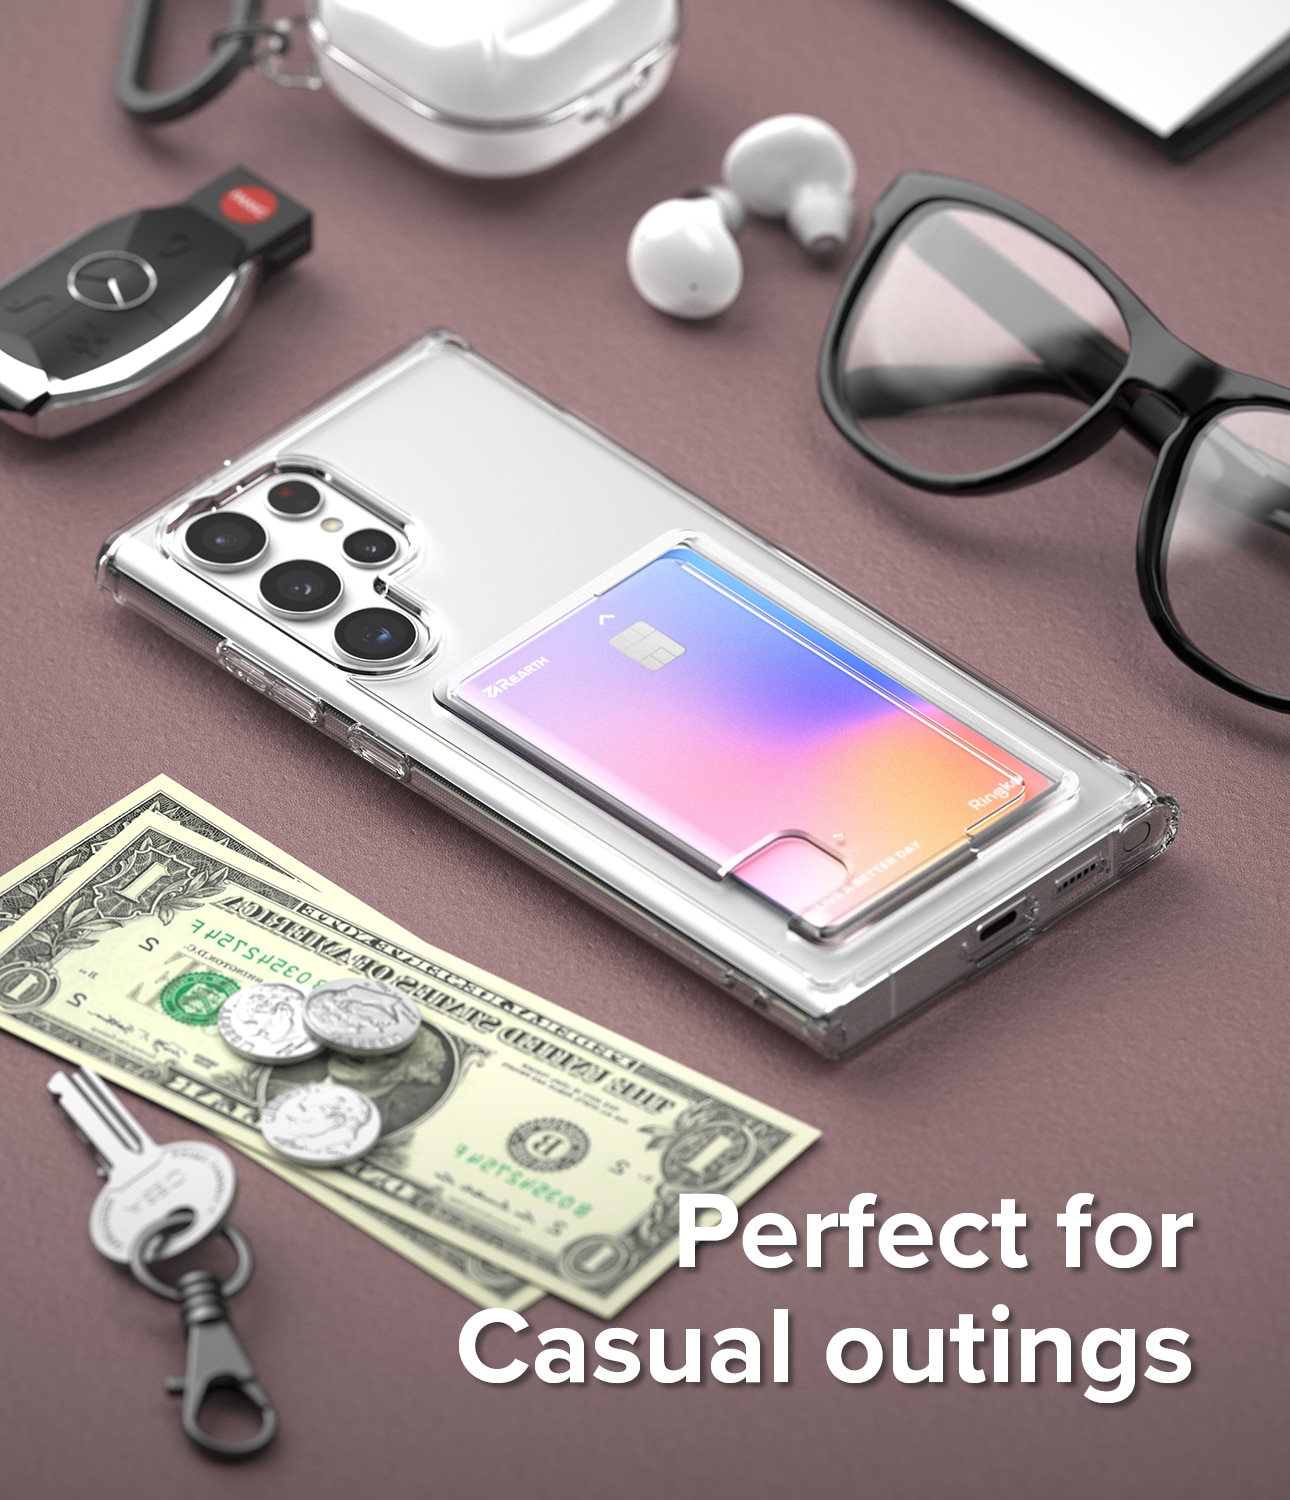 Fusion Card Case Samsung Galaxy S22 Ultra Clear